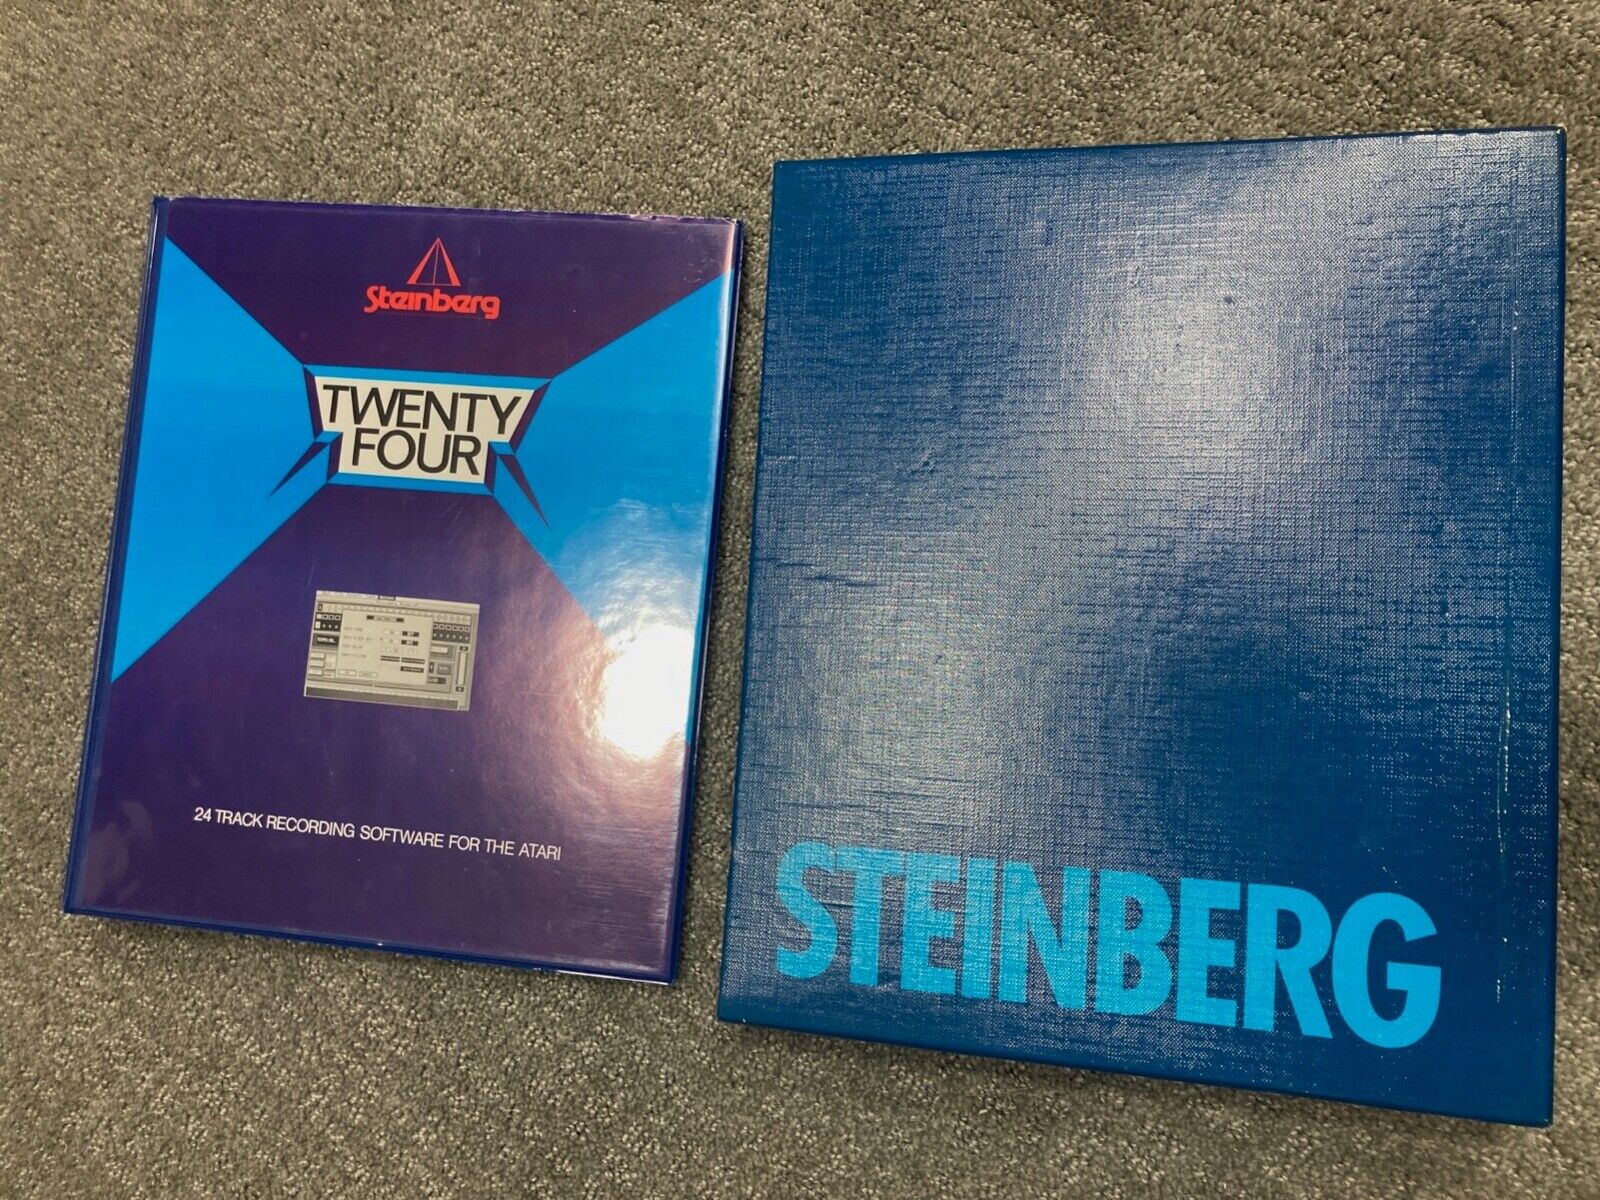 Atari ST Steinberg The PRO Twenty Four 24 Midi Music Software and Manual